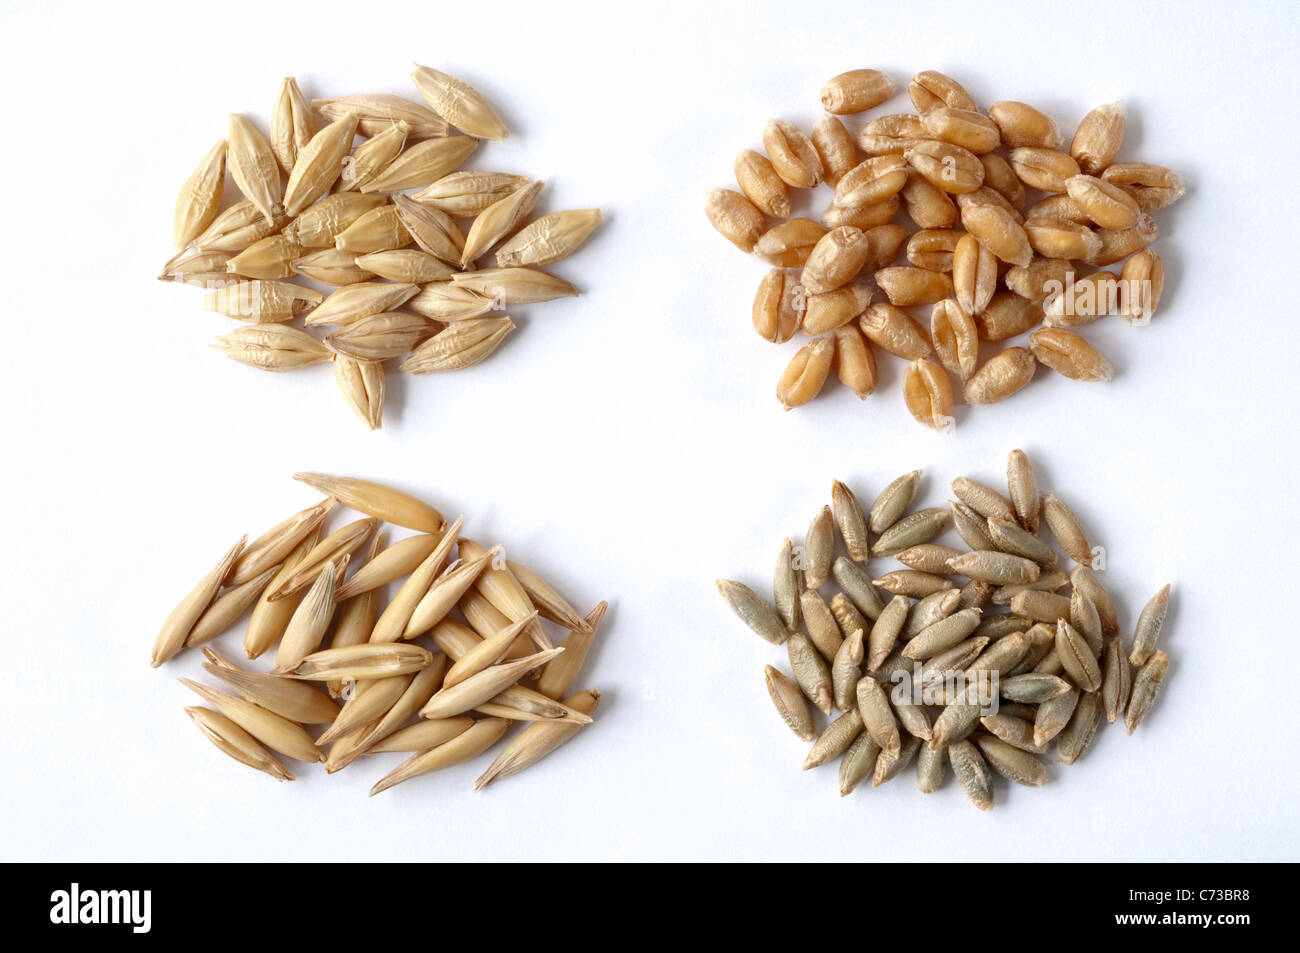 Vari cereali: orzo (Hordeum distichon), di avena (Avena sativa), frumento (Triticum aestivum) e di segala (Secale cereale). Foto Stock